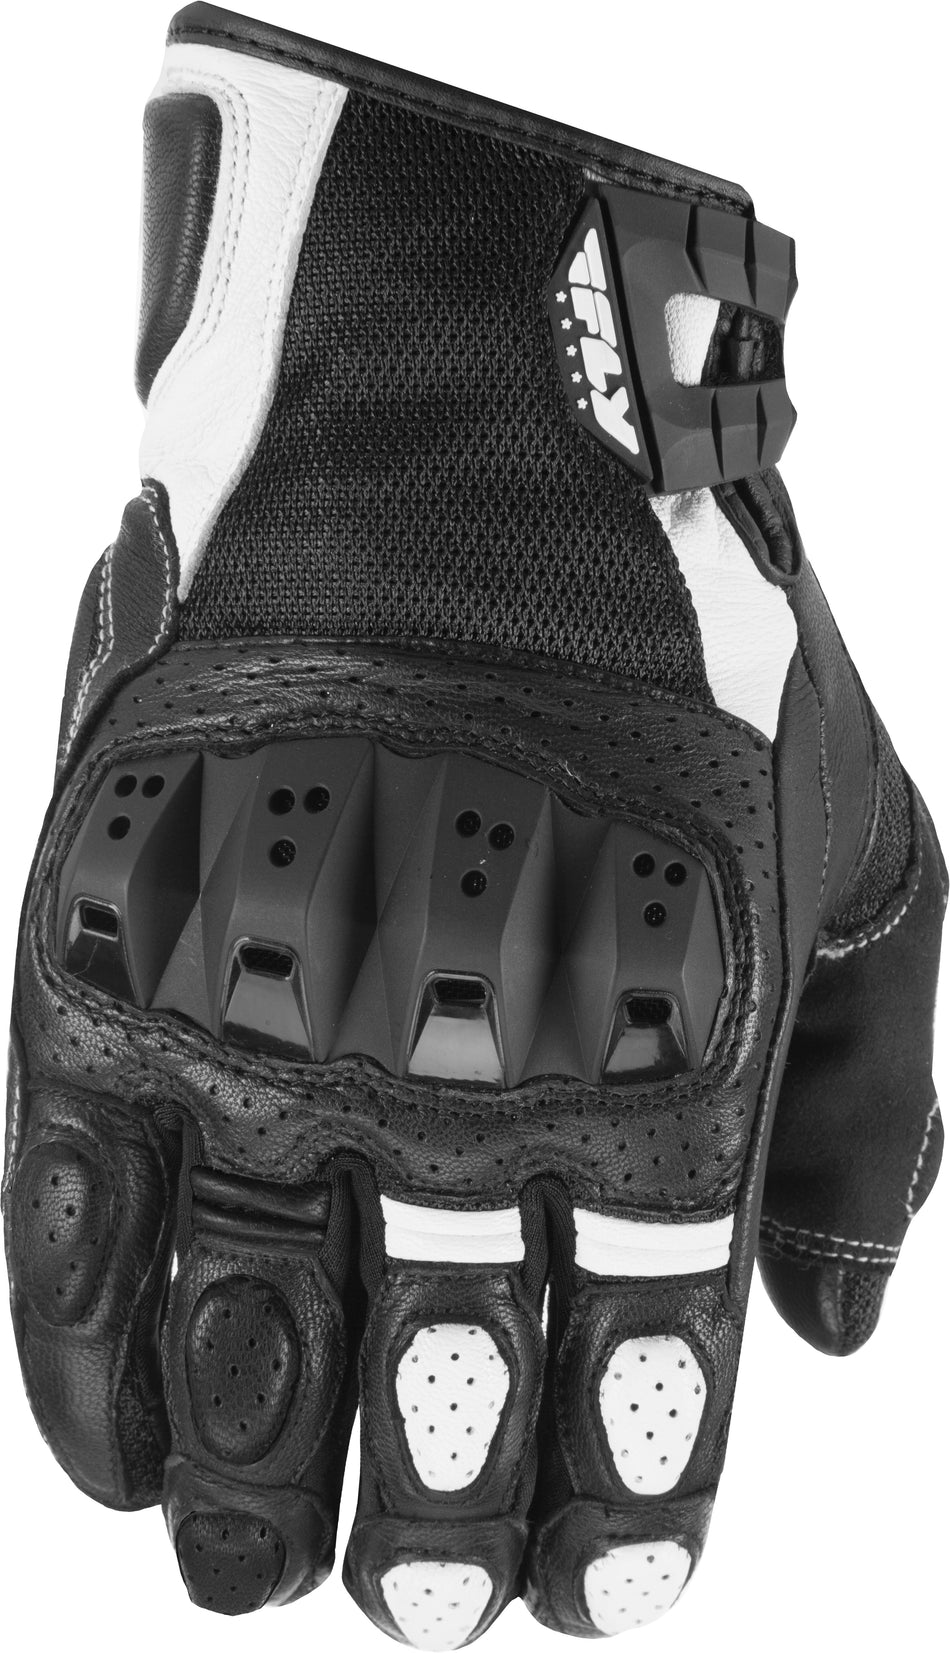 FLY RACING Brawler Gloves Black/White 3x #5884 476-2045~7